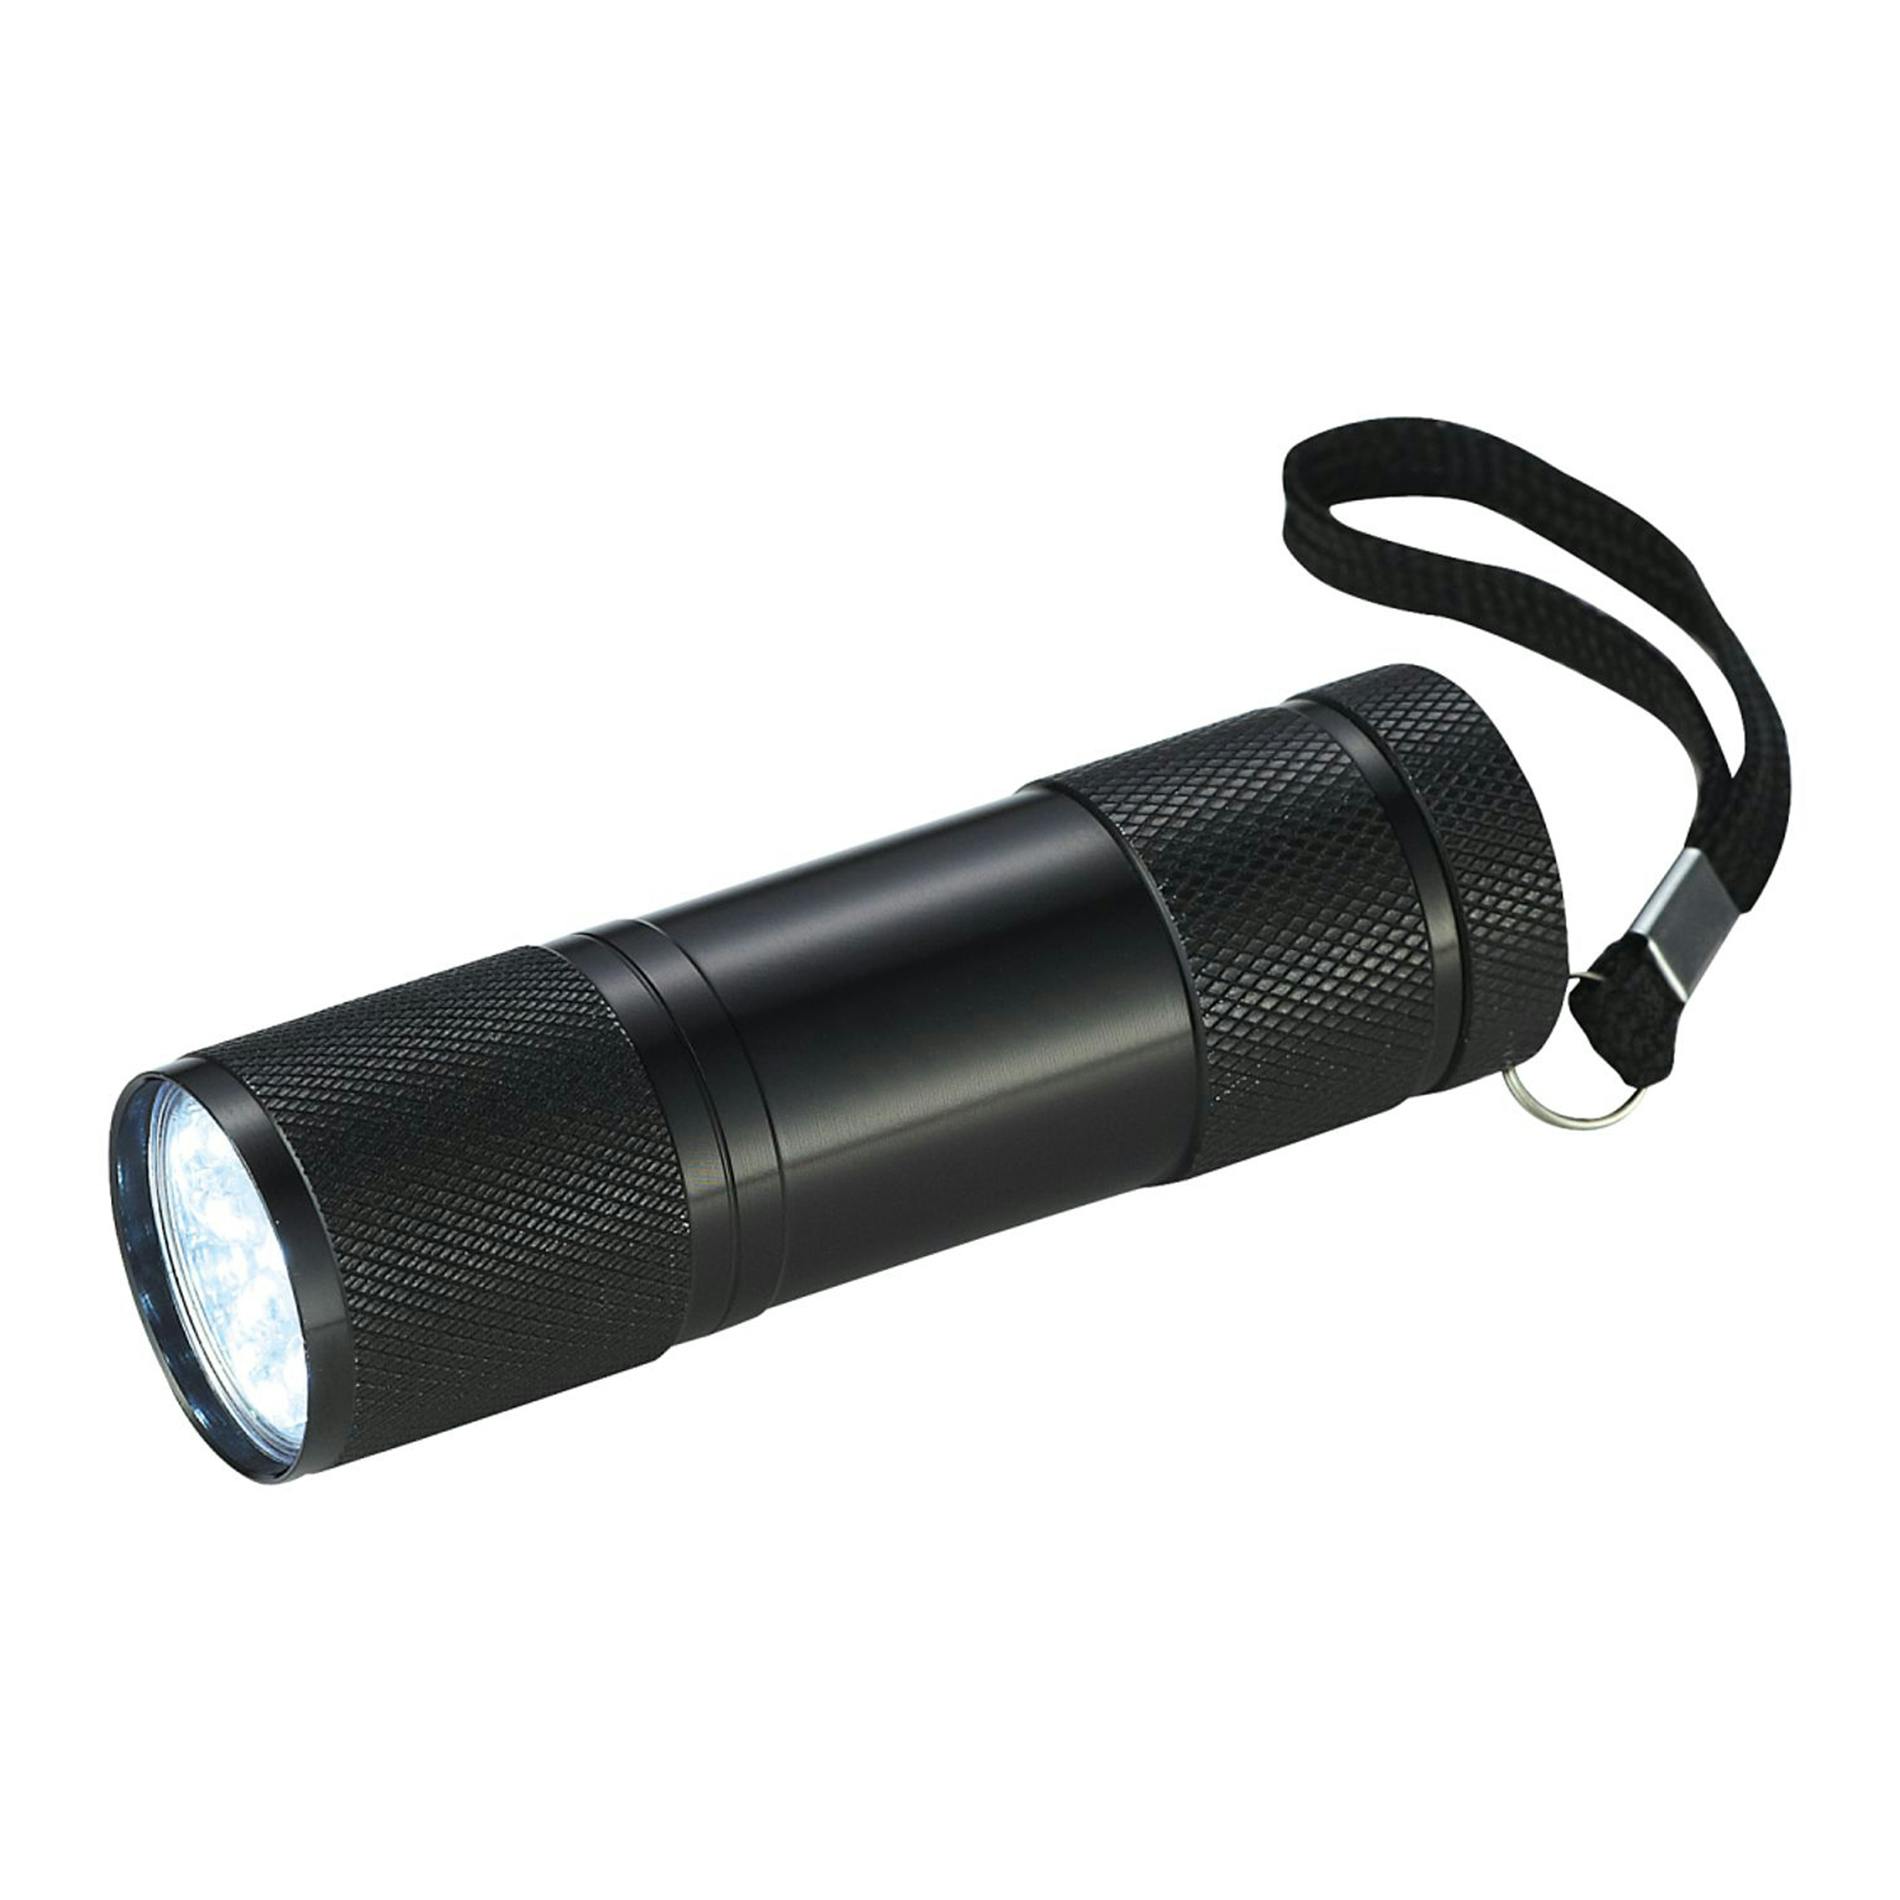 Gripper 9 LED Flashlight - additional Image 1